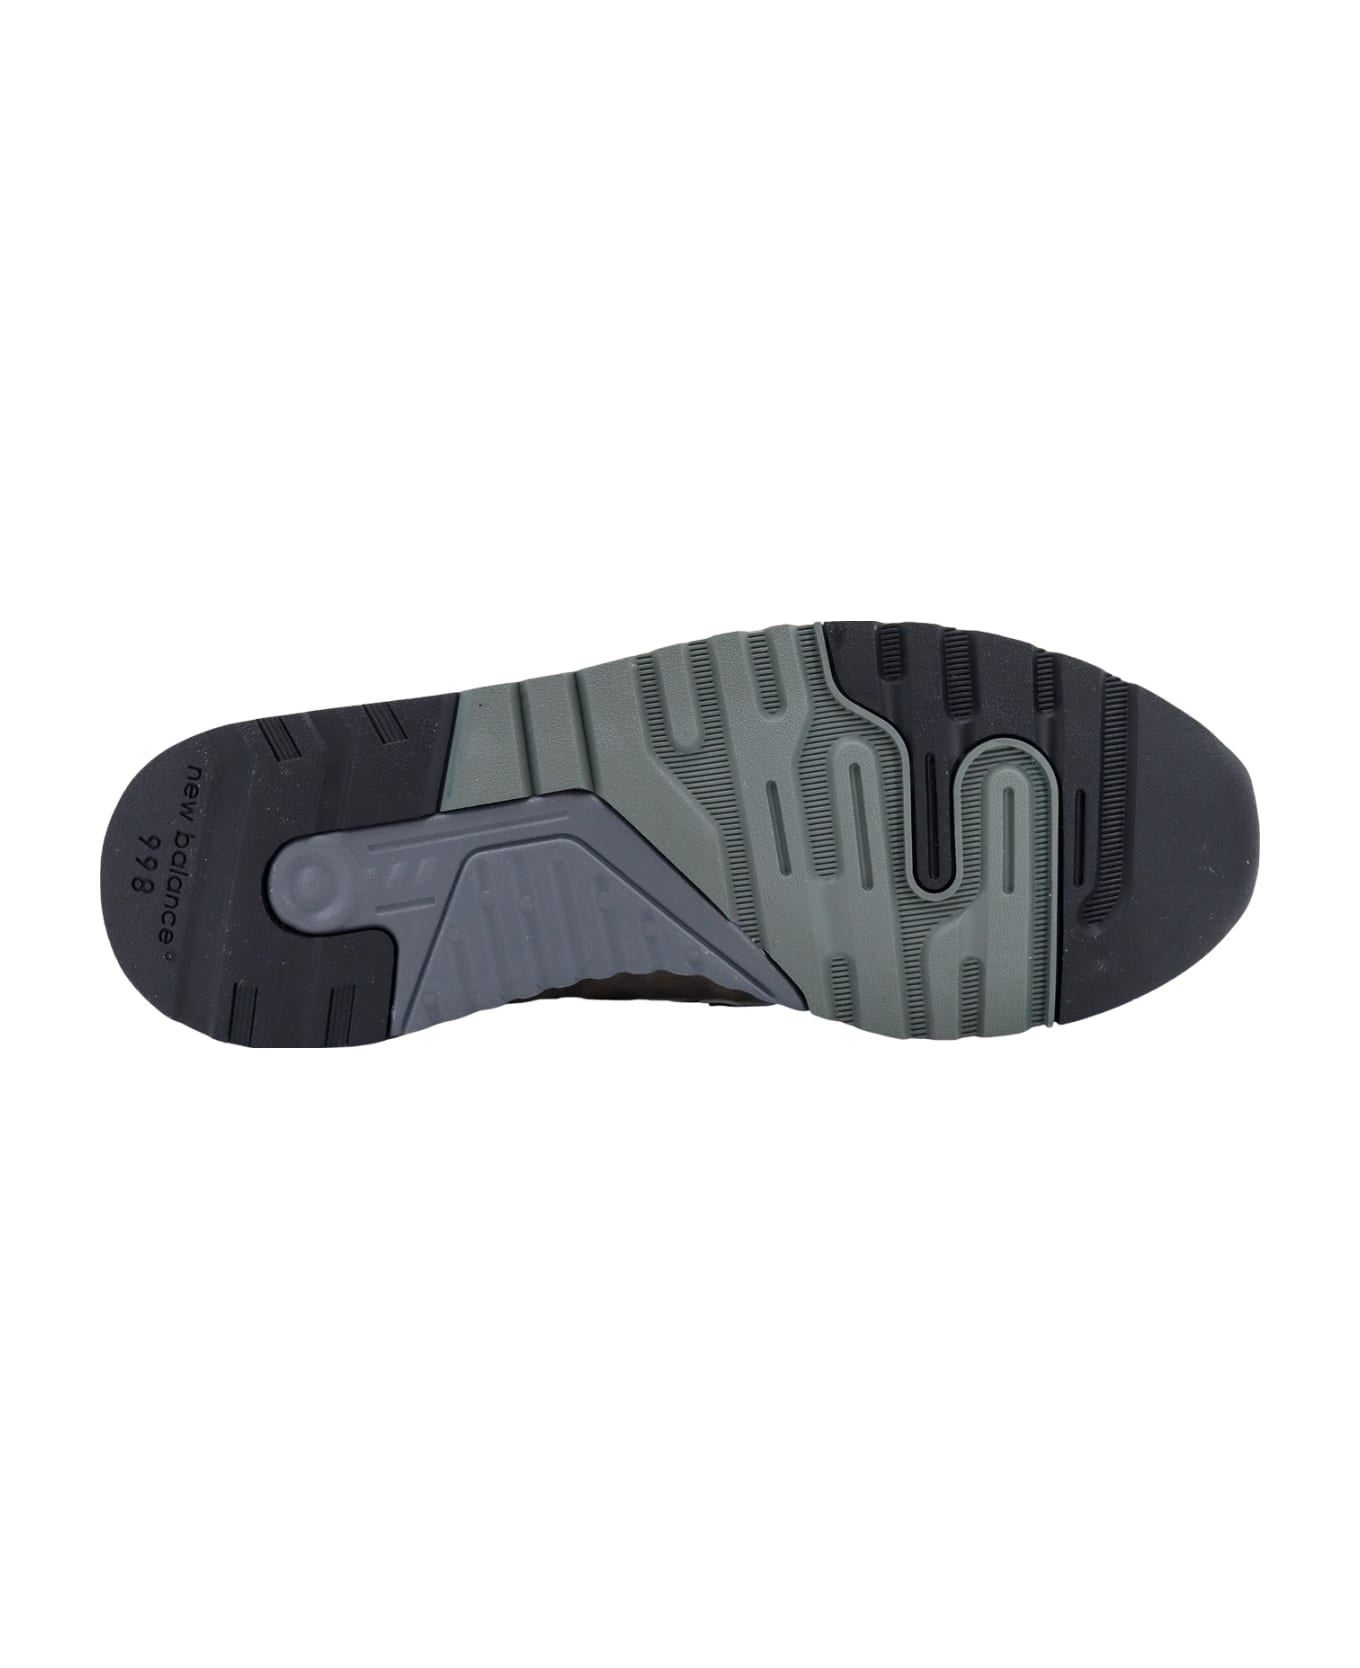 New Balance 998 Sneakers - Grey